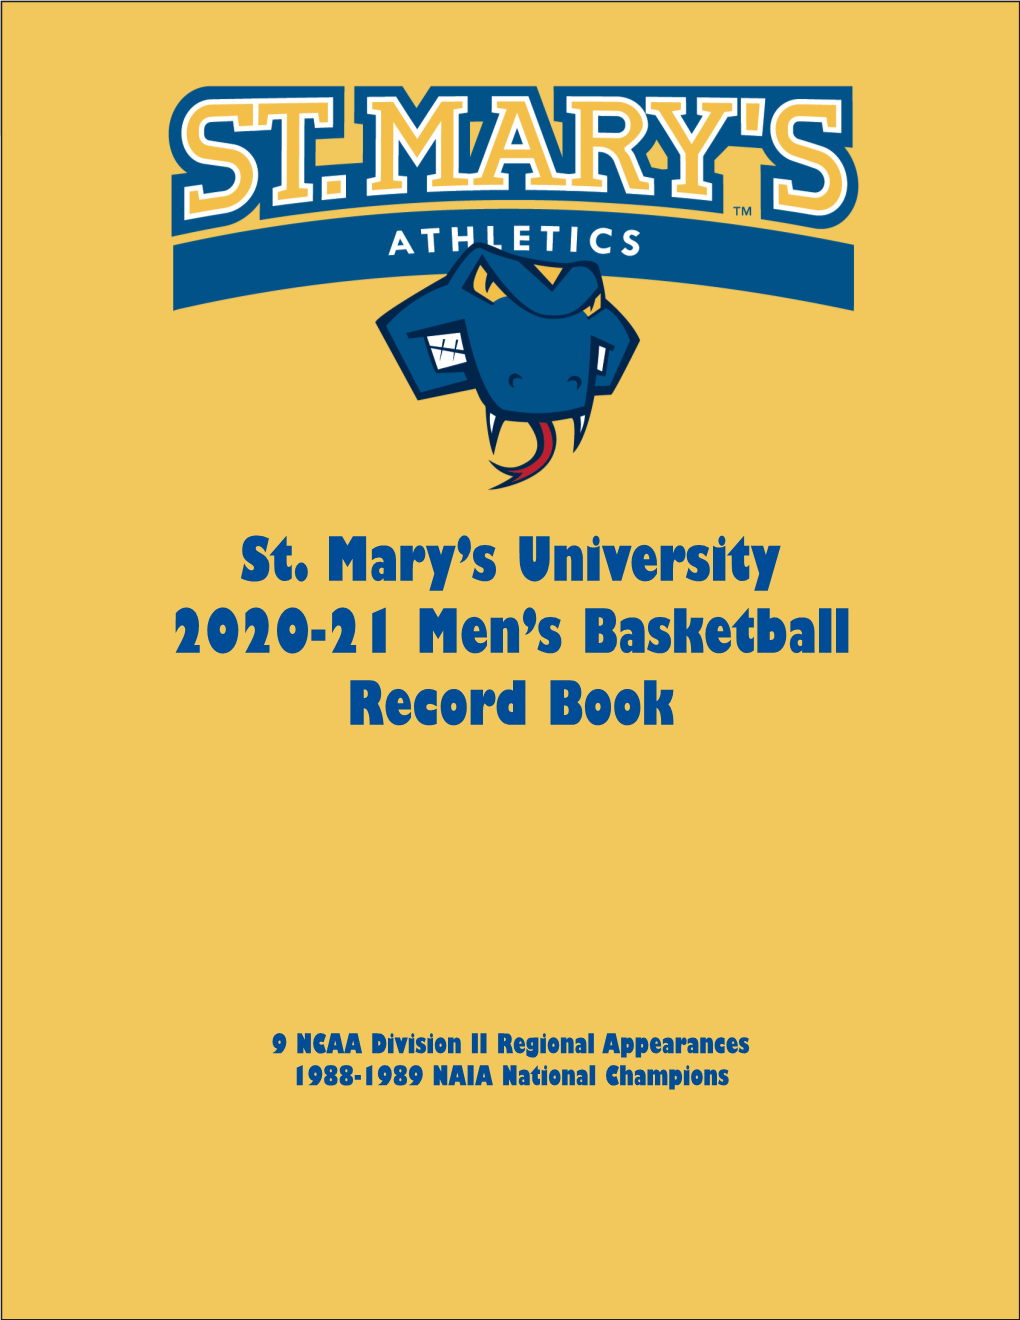 St. Mary's University 2020-21 Men's Basketball Record Book